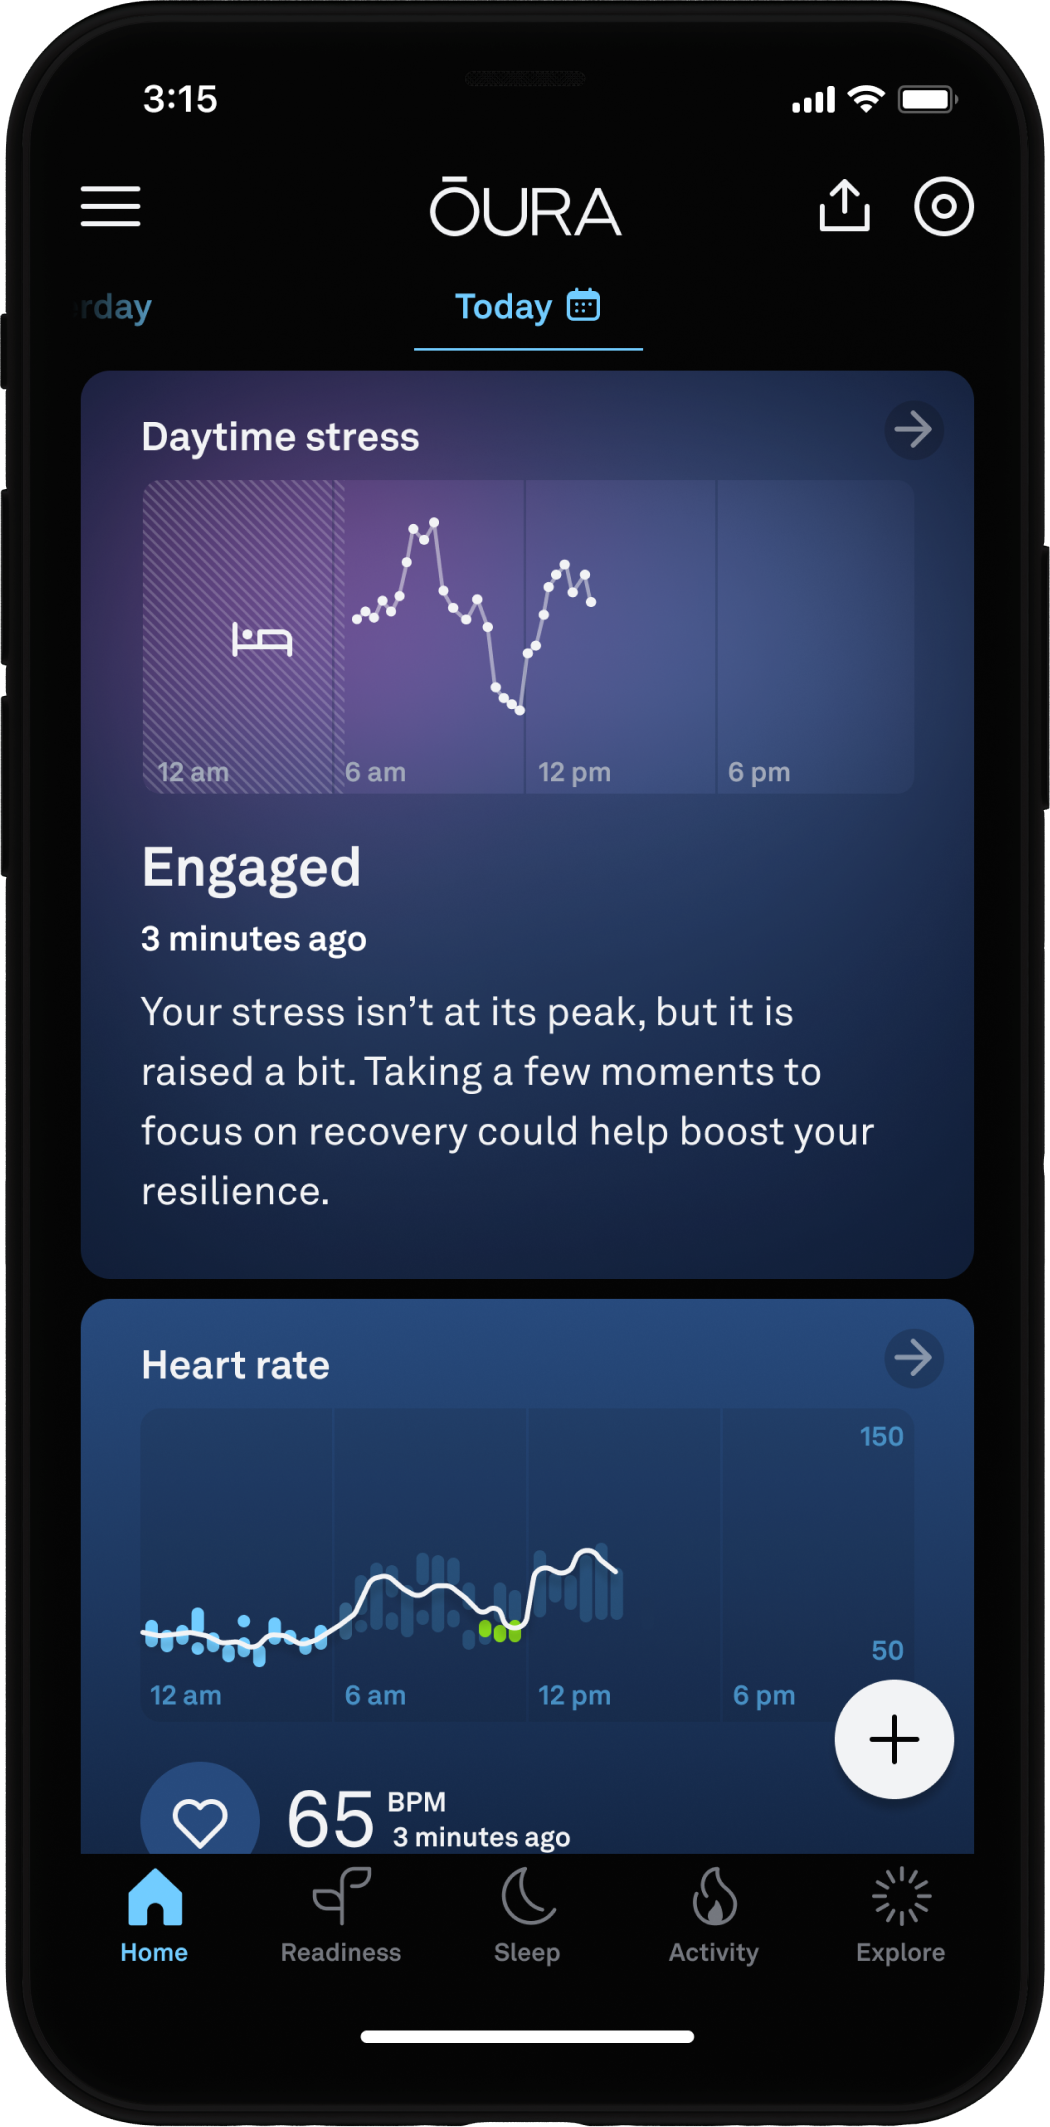 Oura Stress Feature UI Screenshot: Engaged